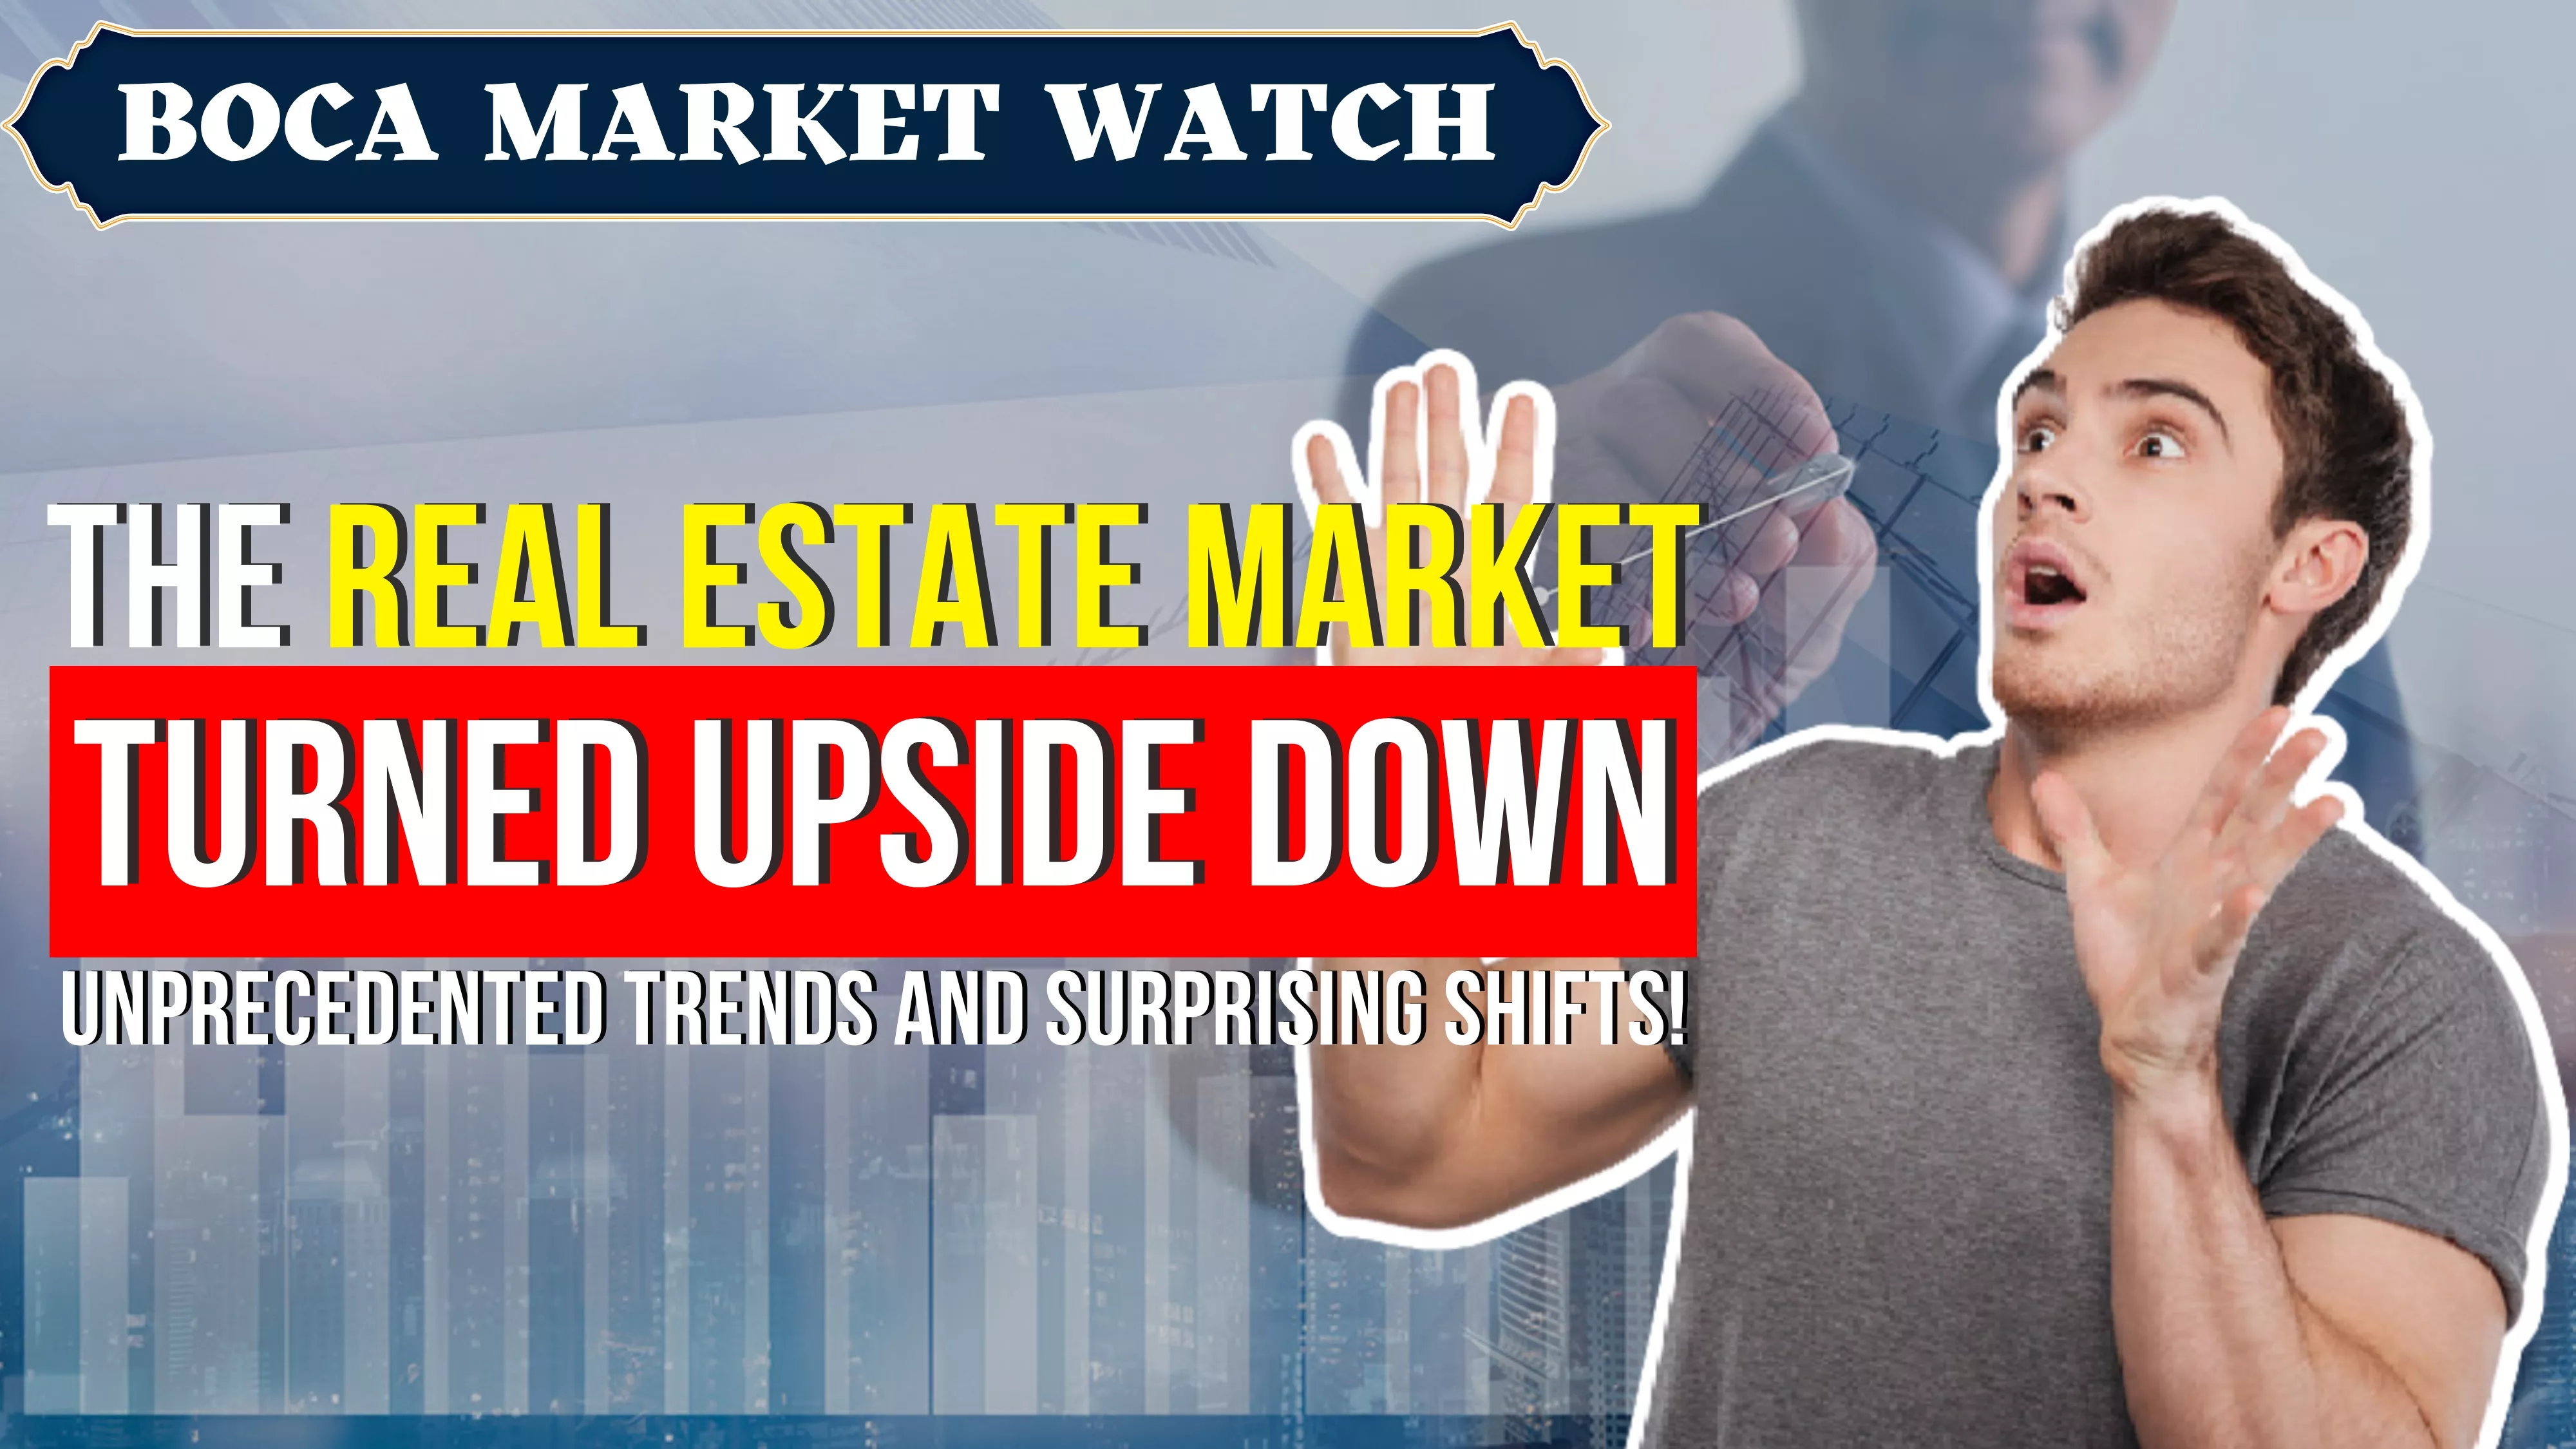 The Real Estate Market Turned Upside Down